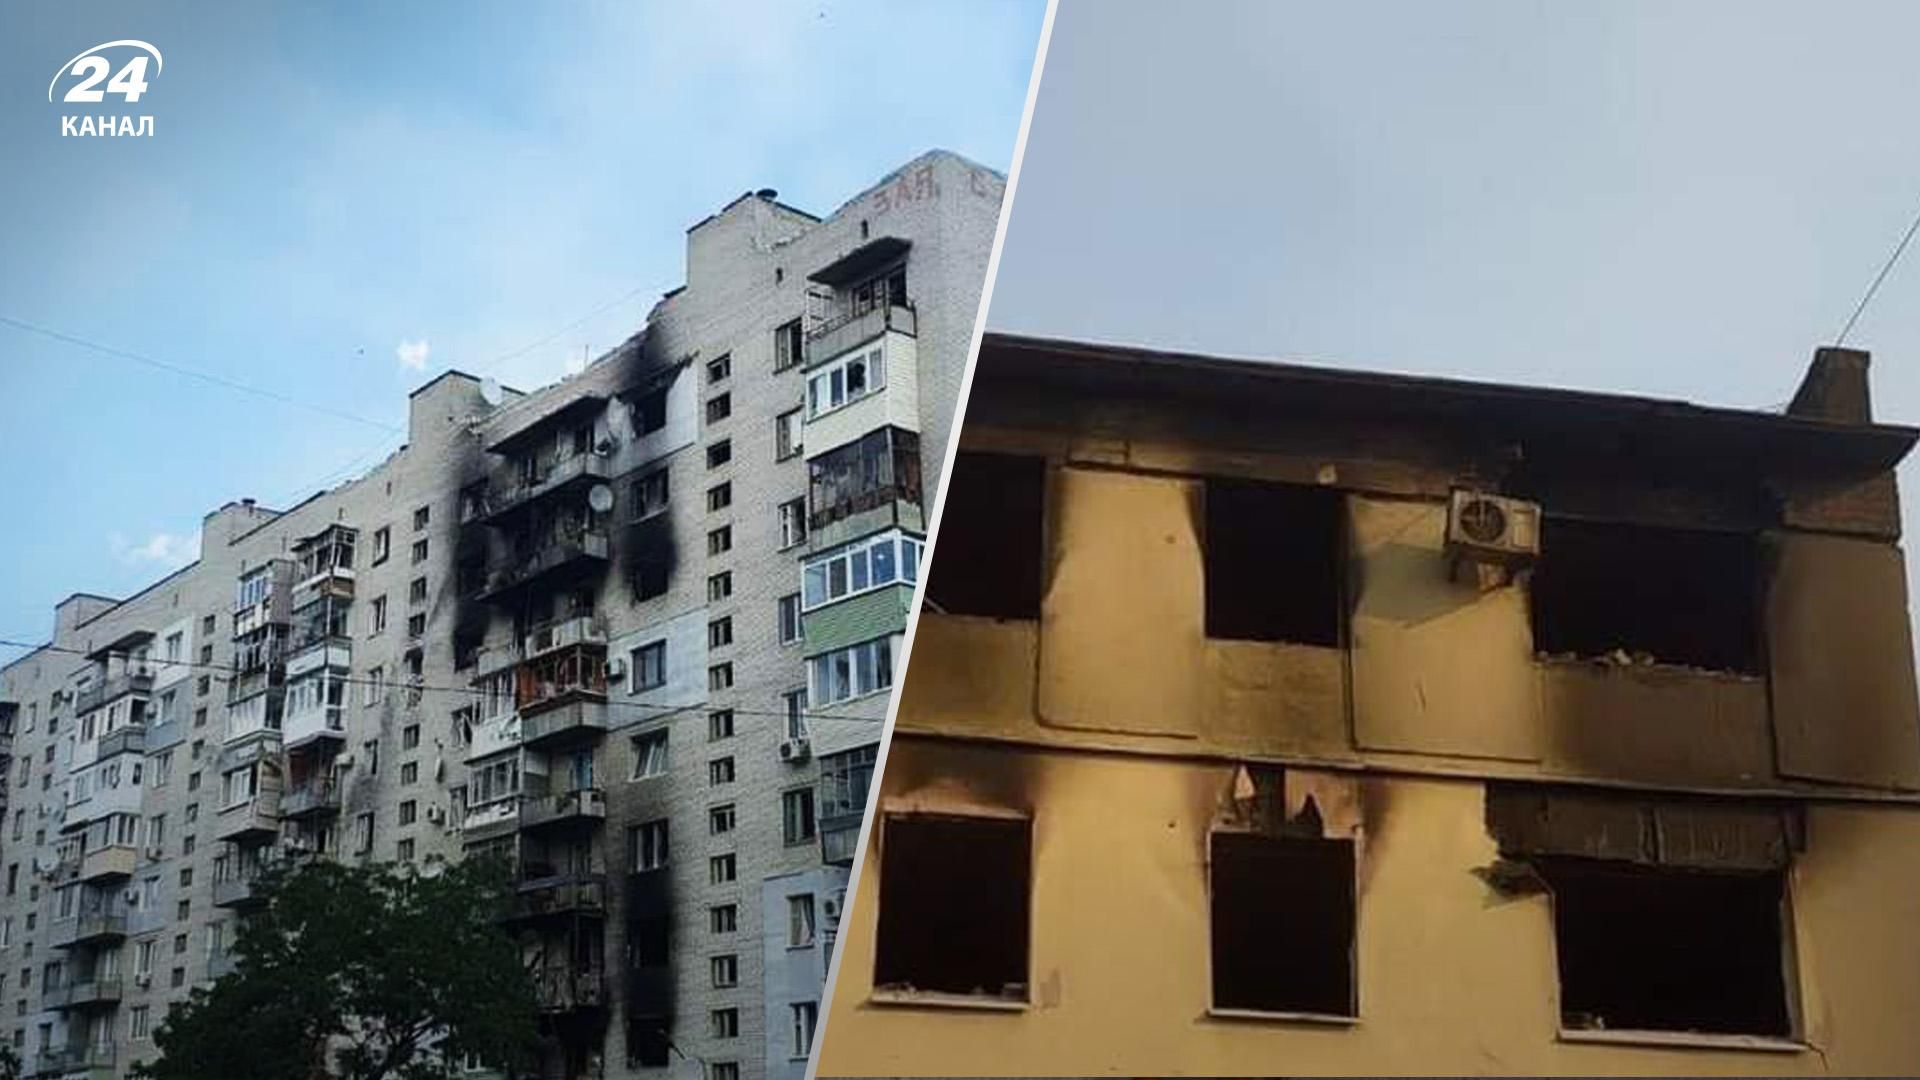 В Северодонецке ситуация крайне обостренная: россияне уничтожают многоэтажки и "Азот"